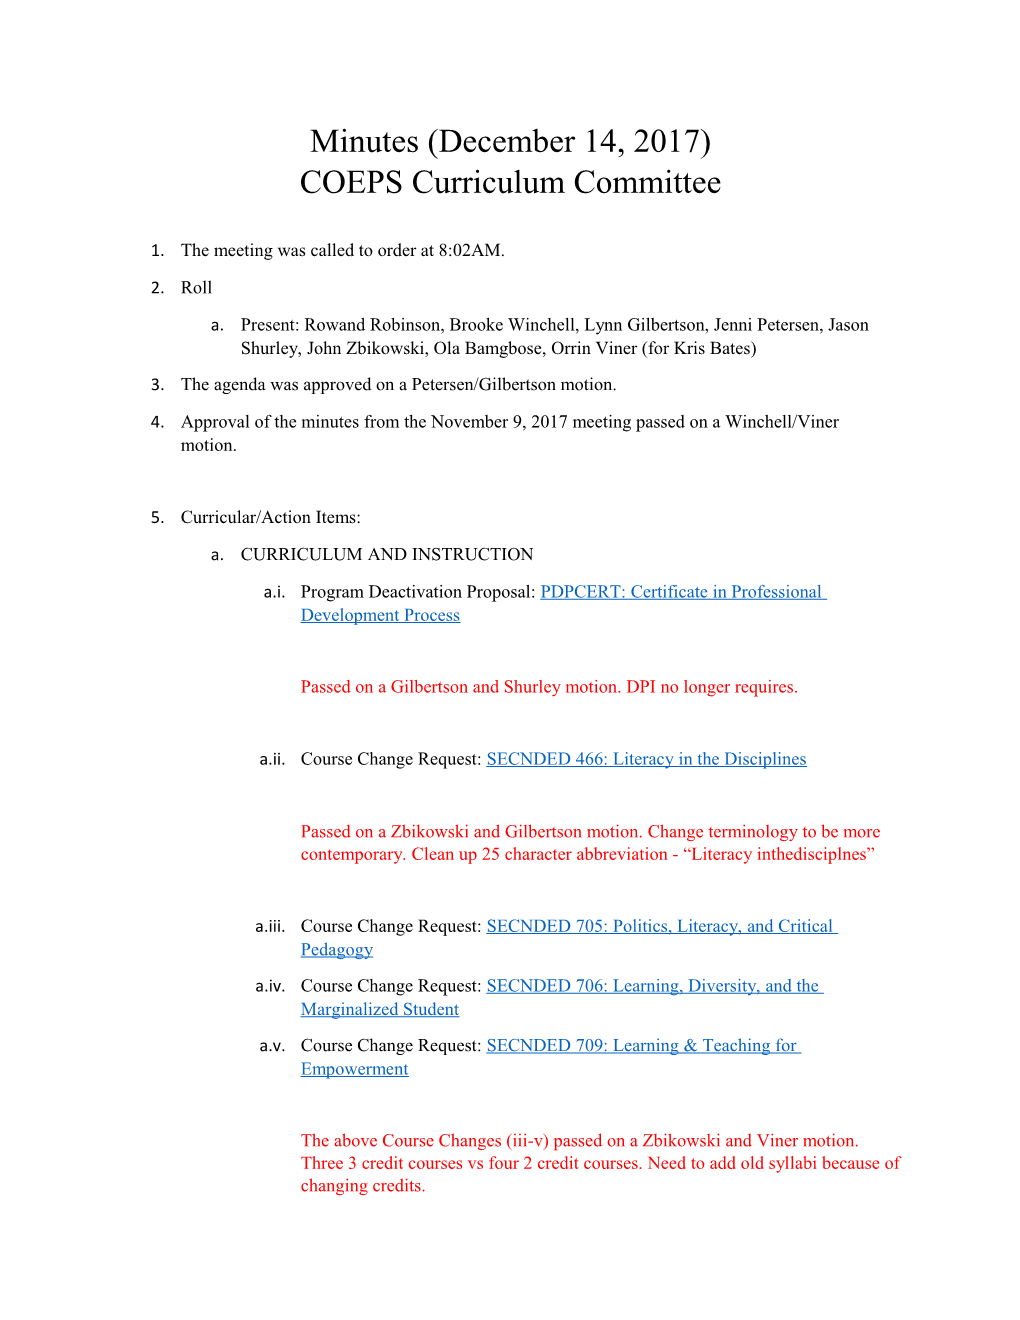 COEPS Curriculum Committee